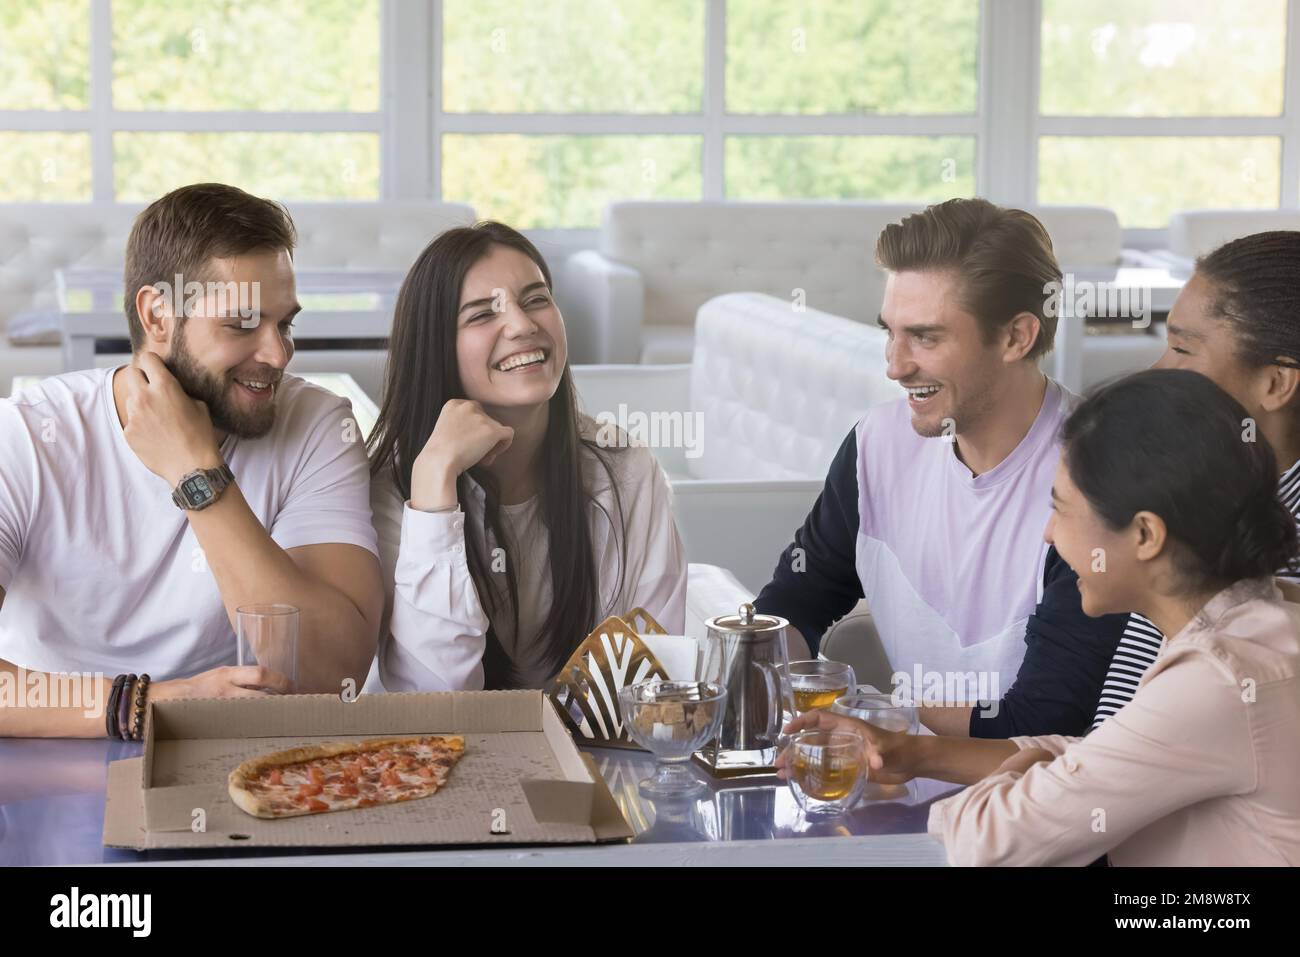 Happy joyful young friends having fun in pizzeria Stock Photo